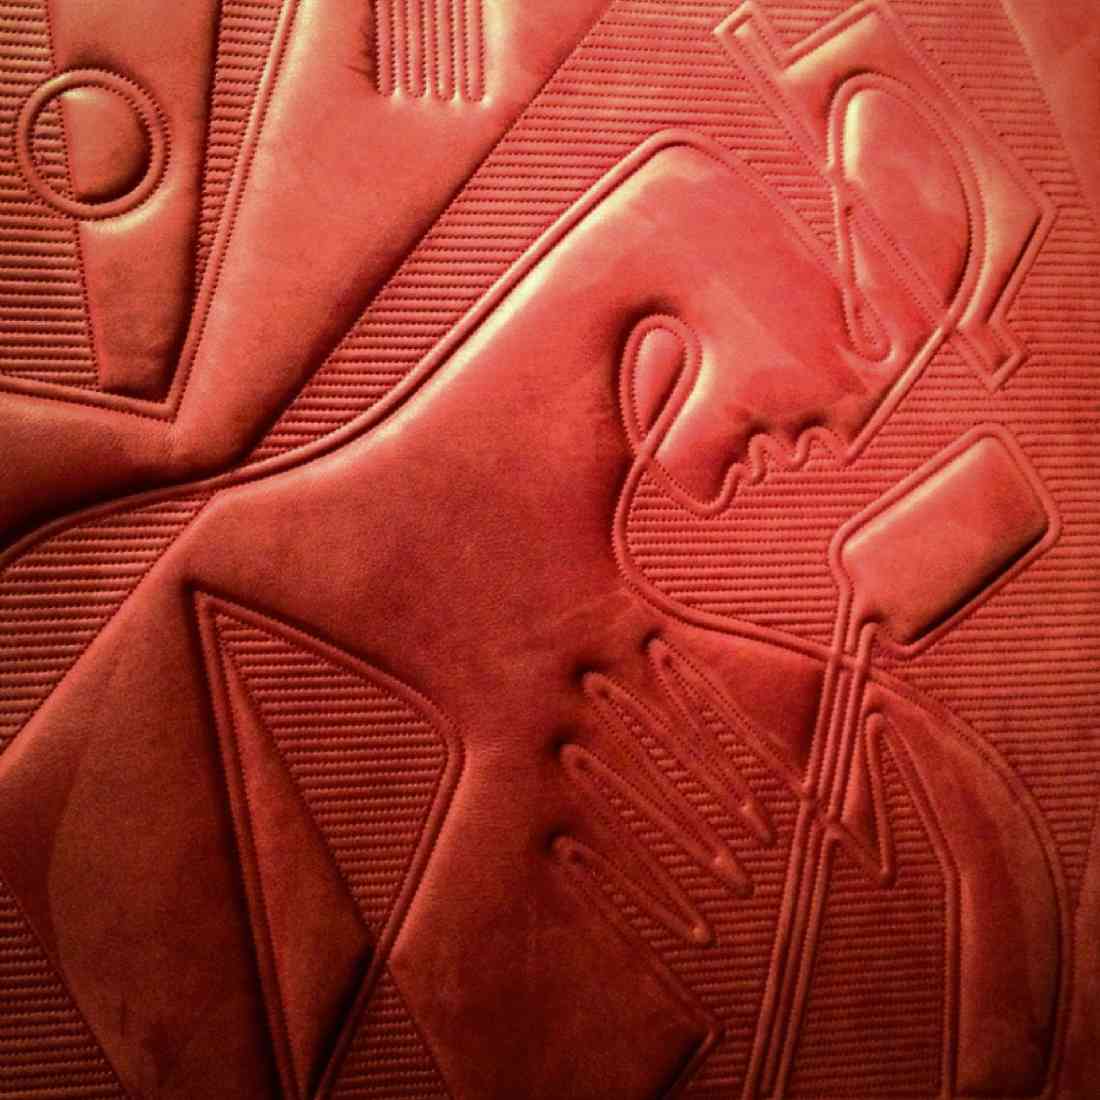 Paul Wearing: Jazz Wall Detail